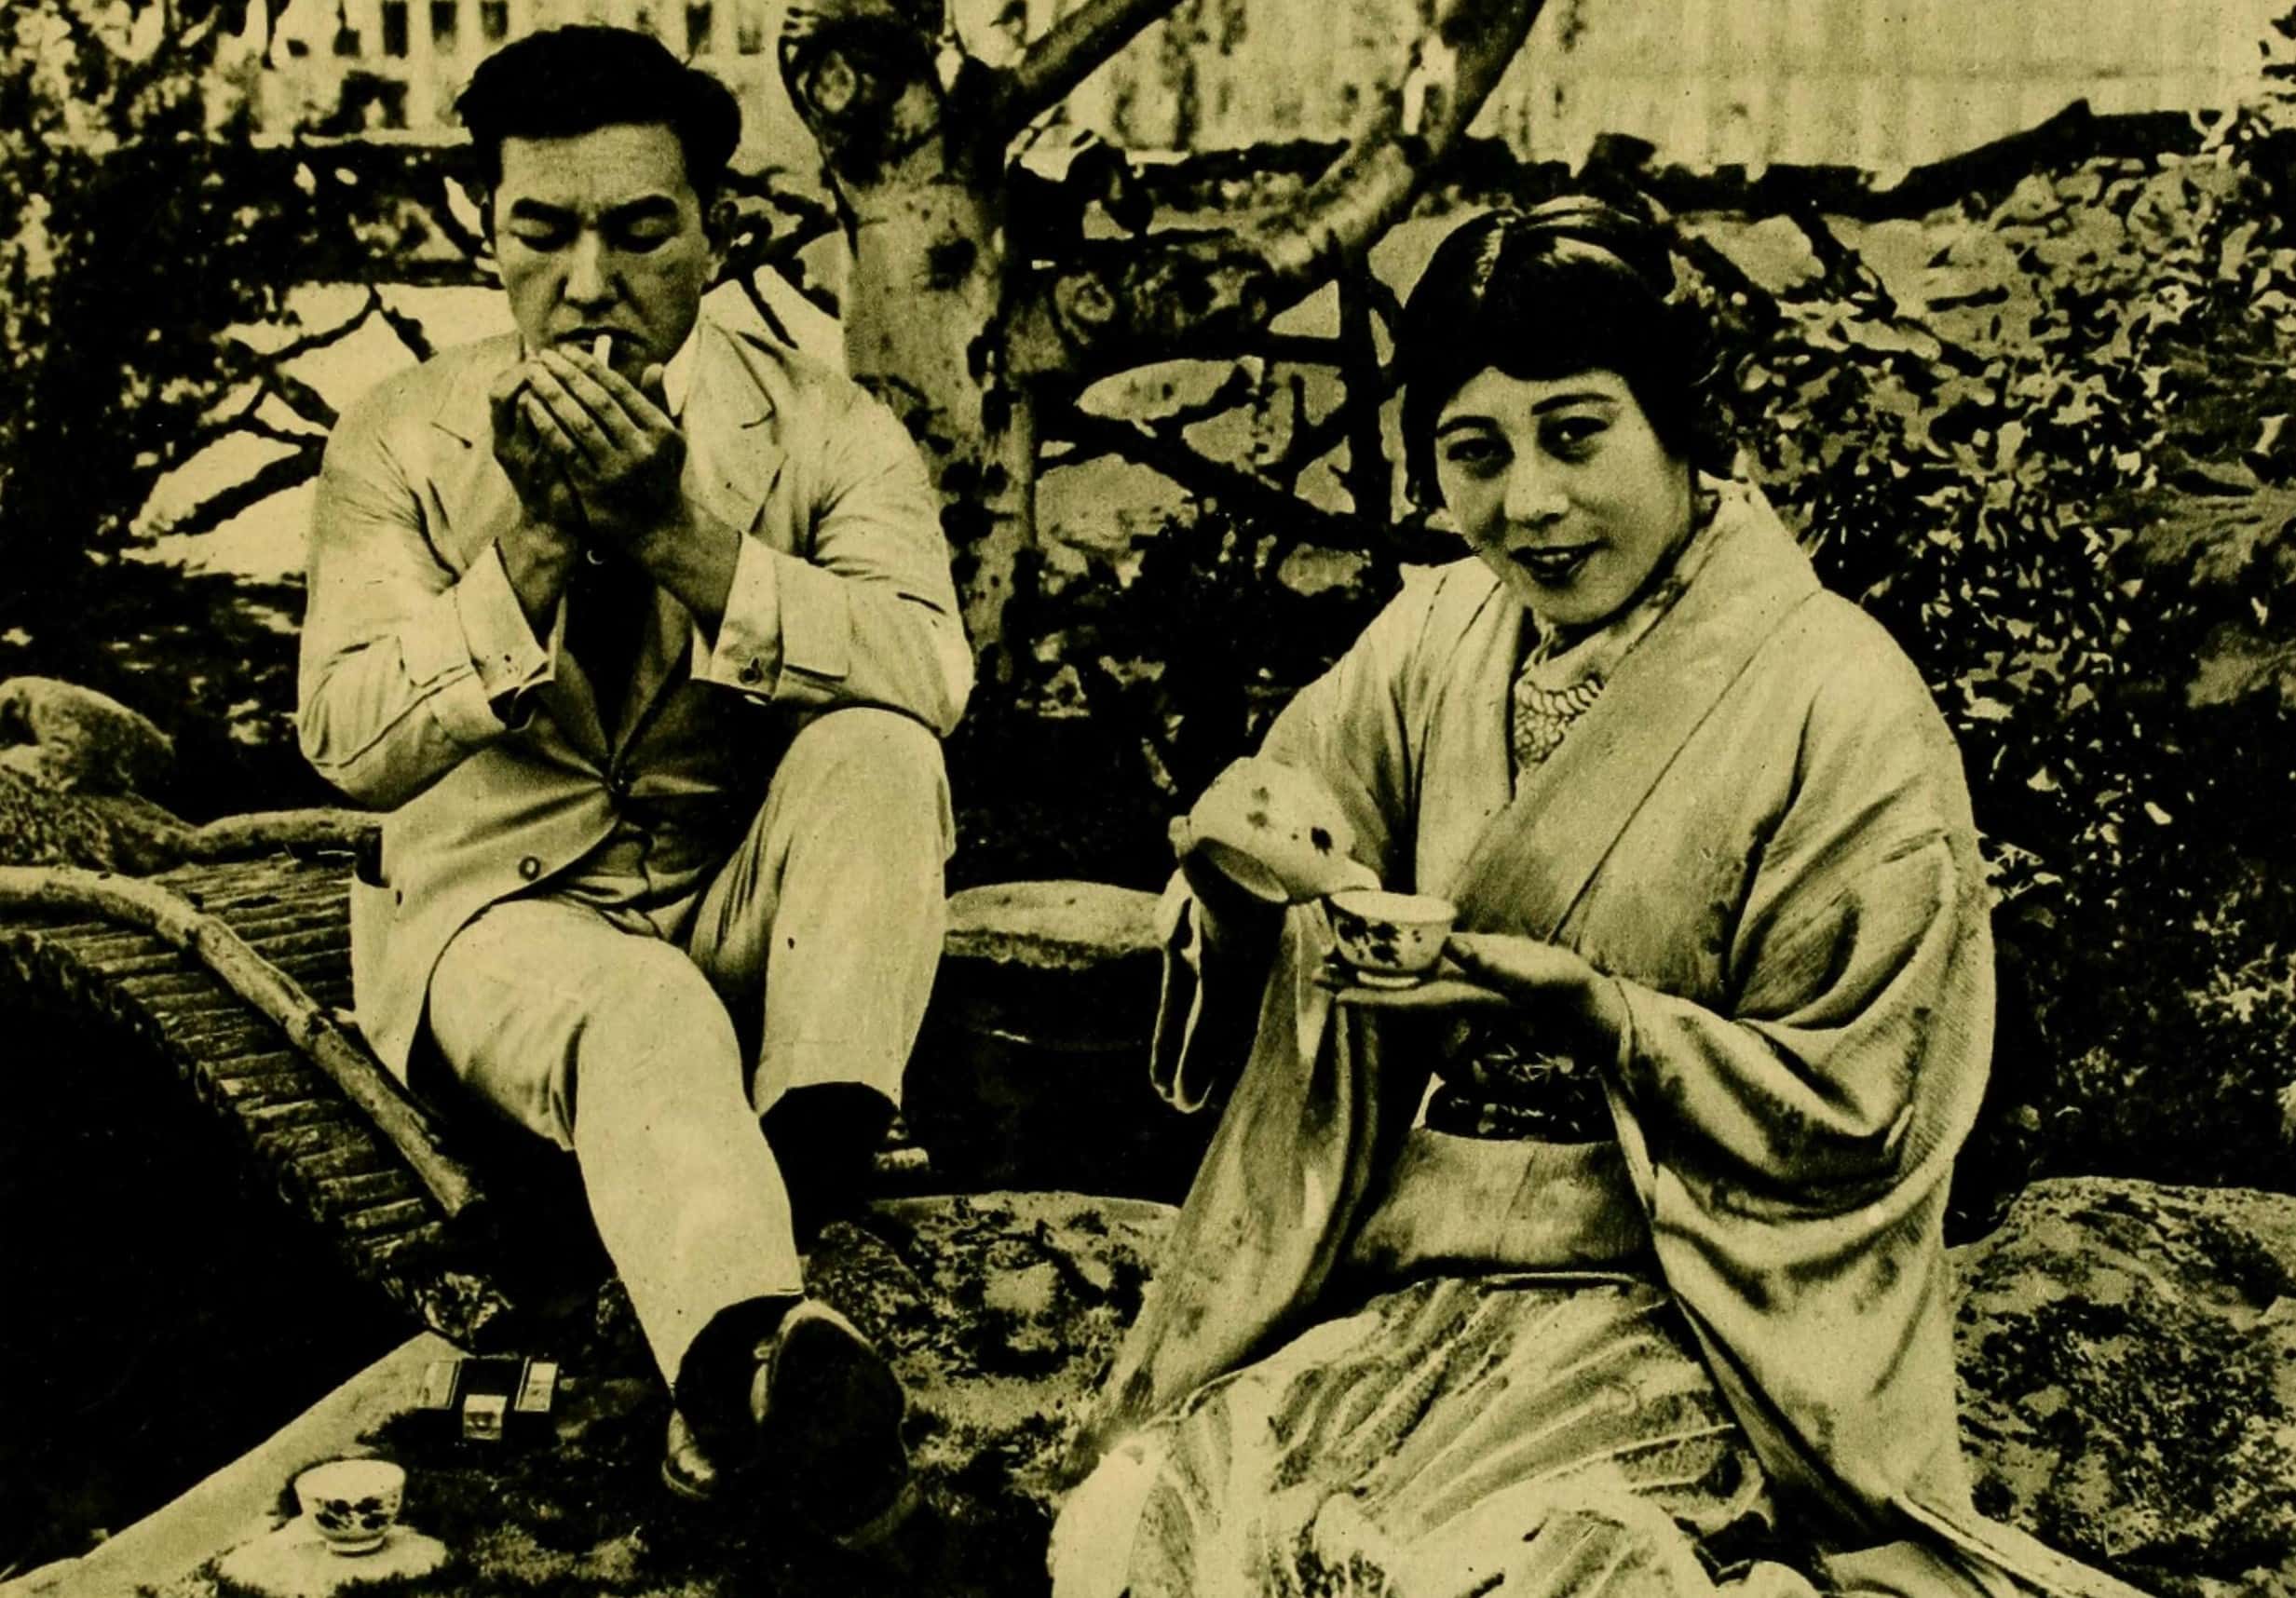 The First Japanese Hollywood Heartthrob